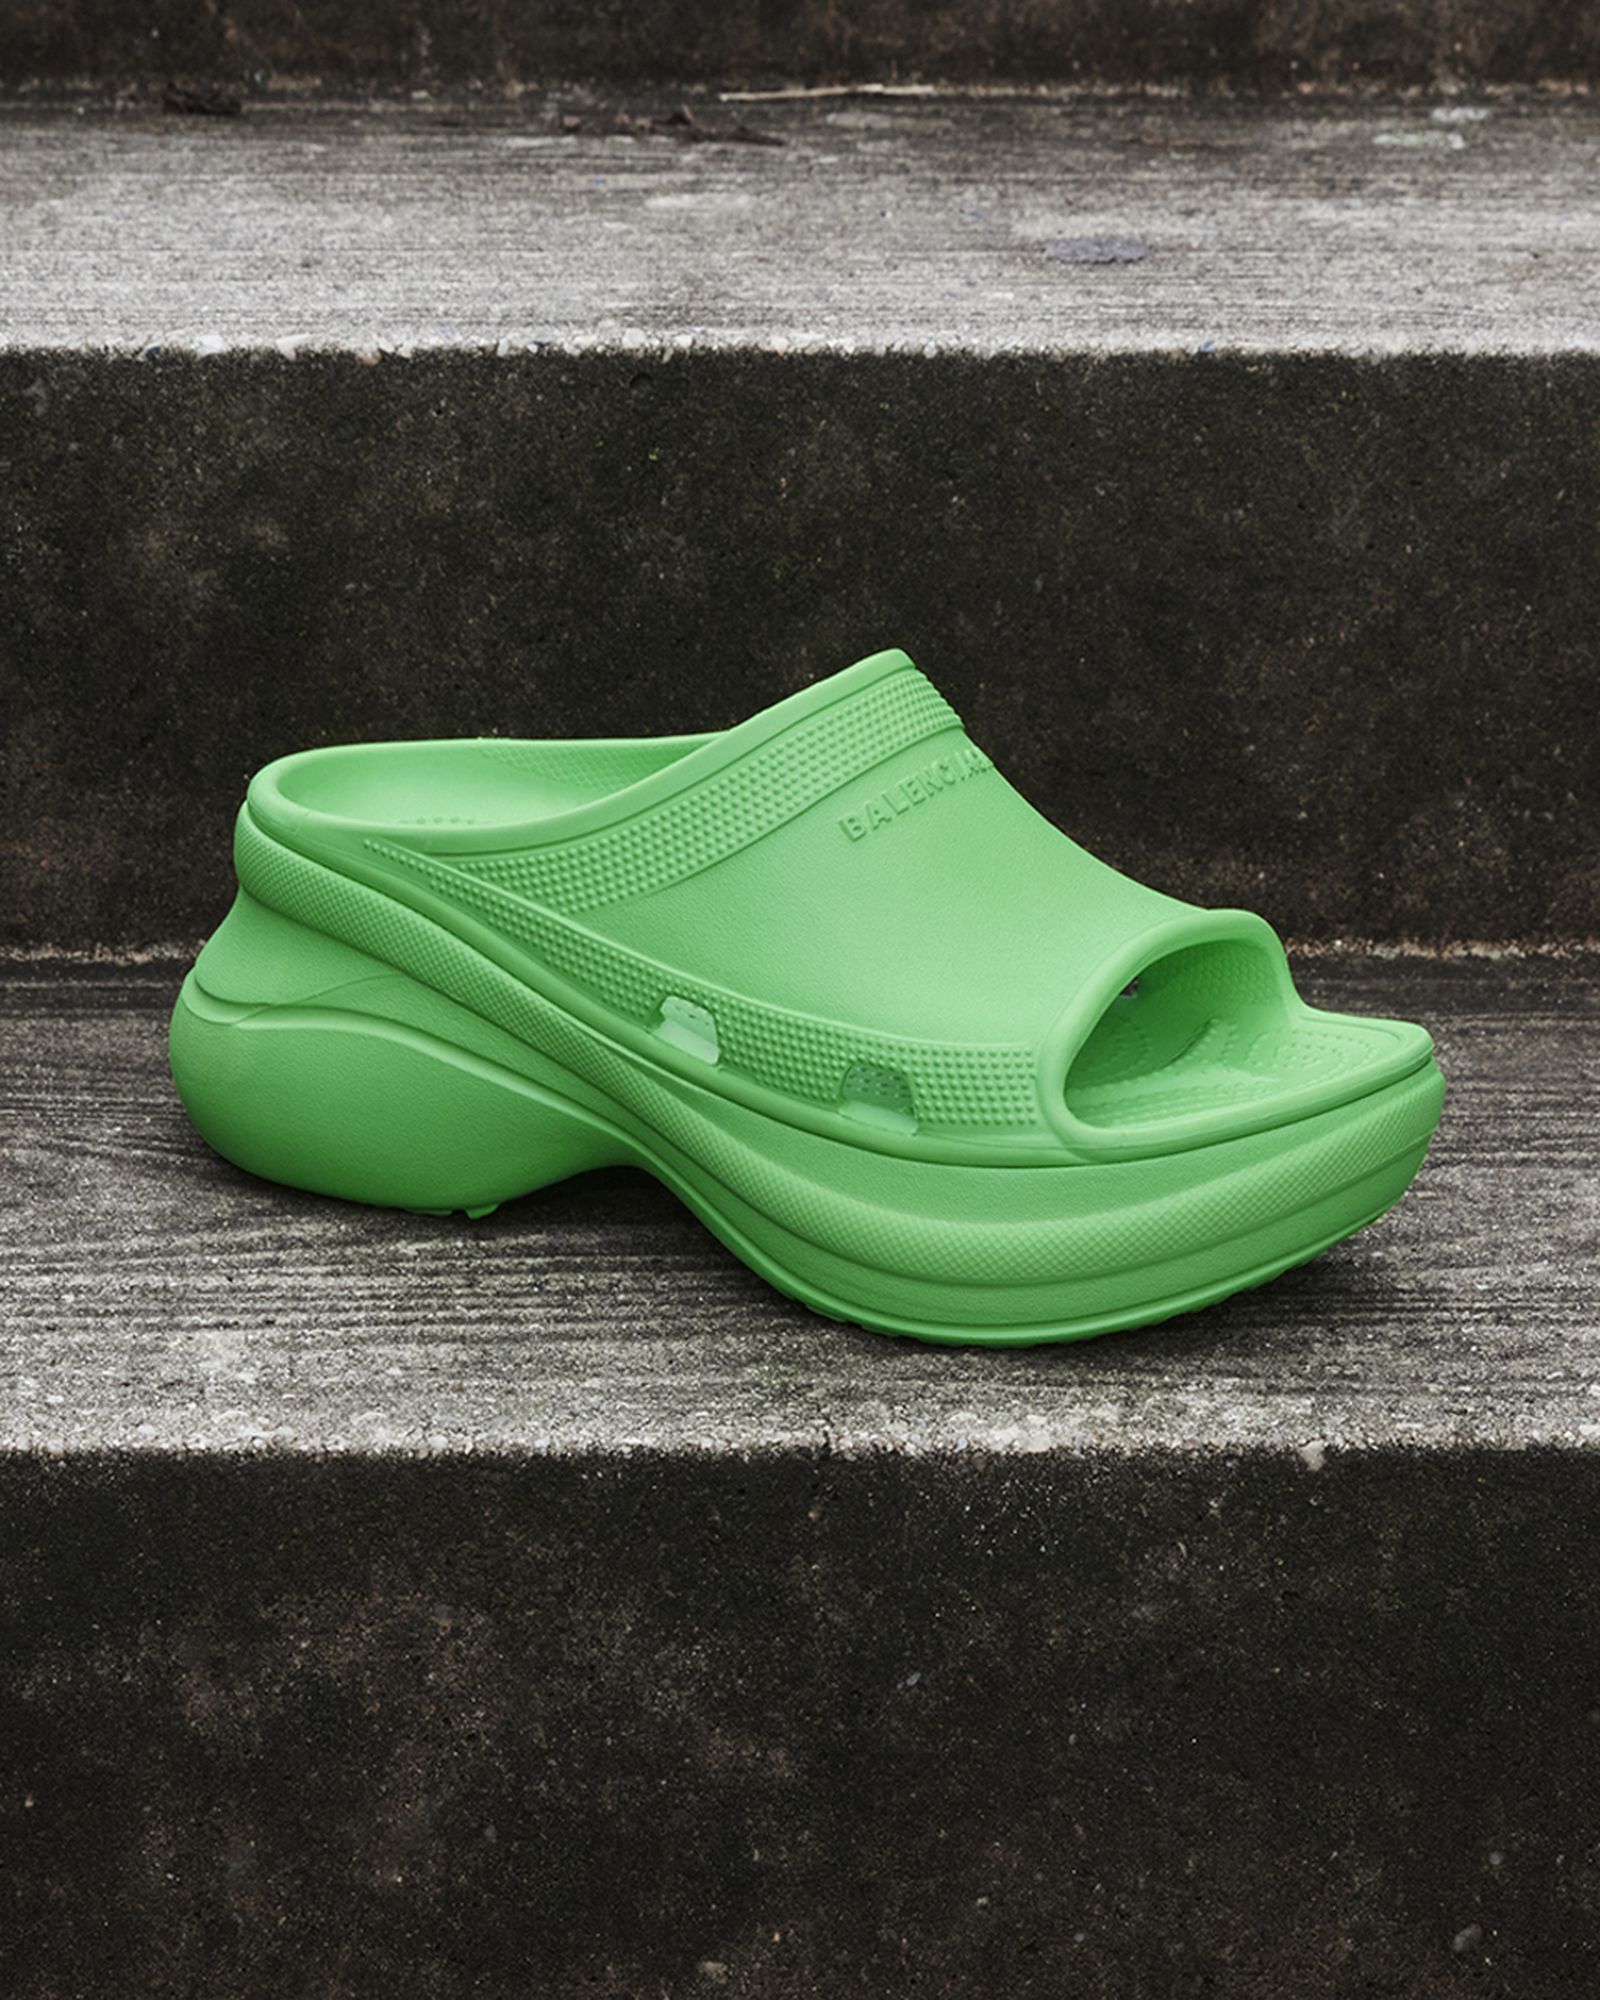 Balenciaga's Crocs Pool Slide Collab Is a Summer Sandal